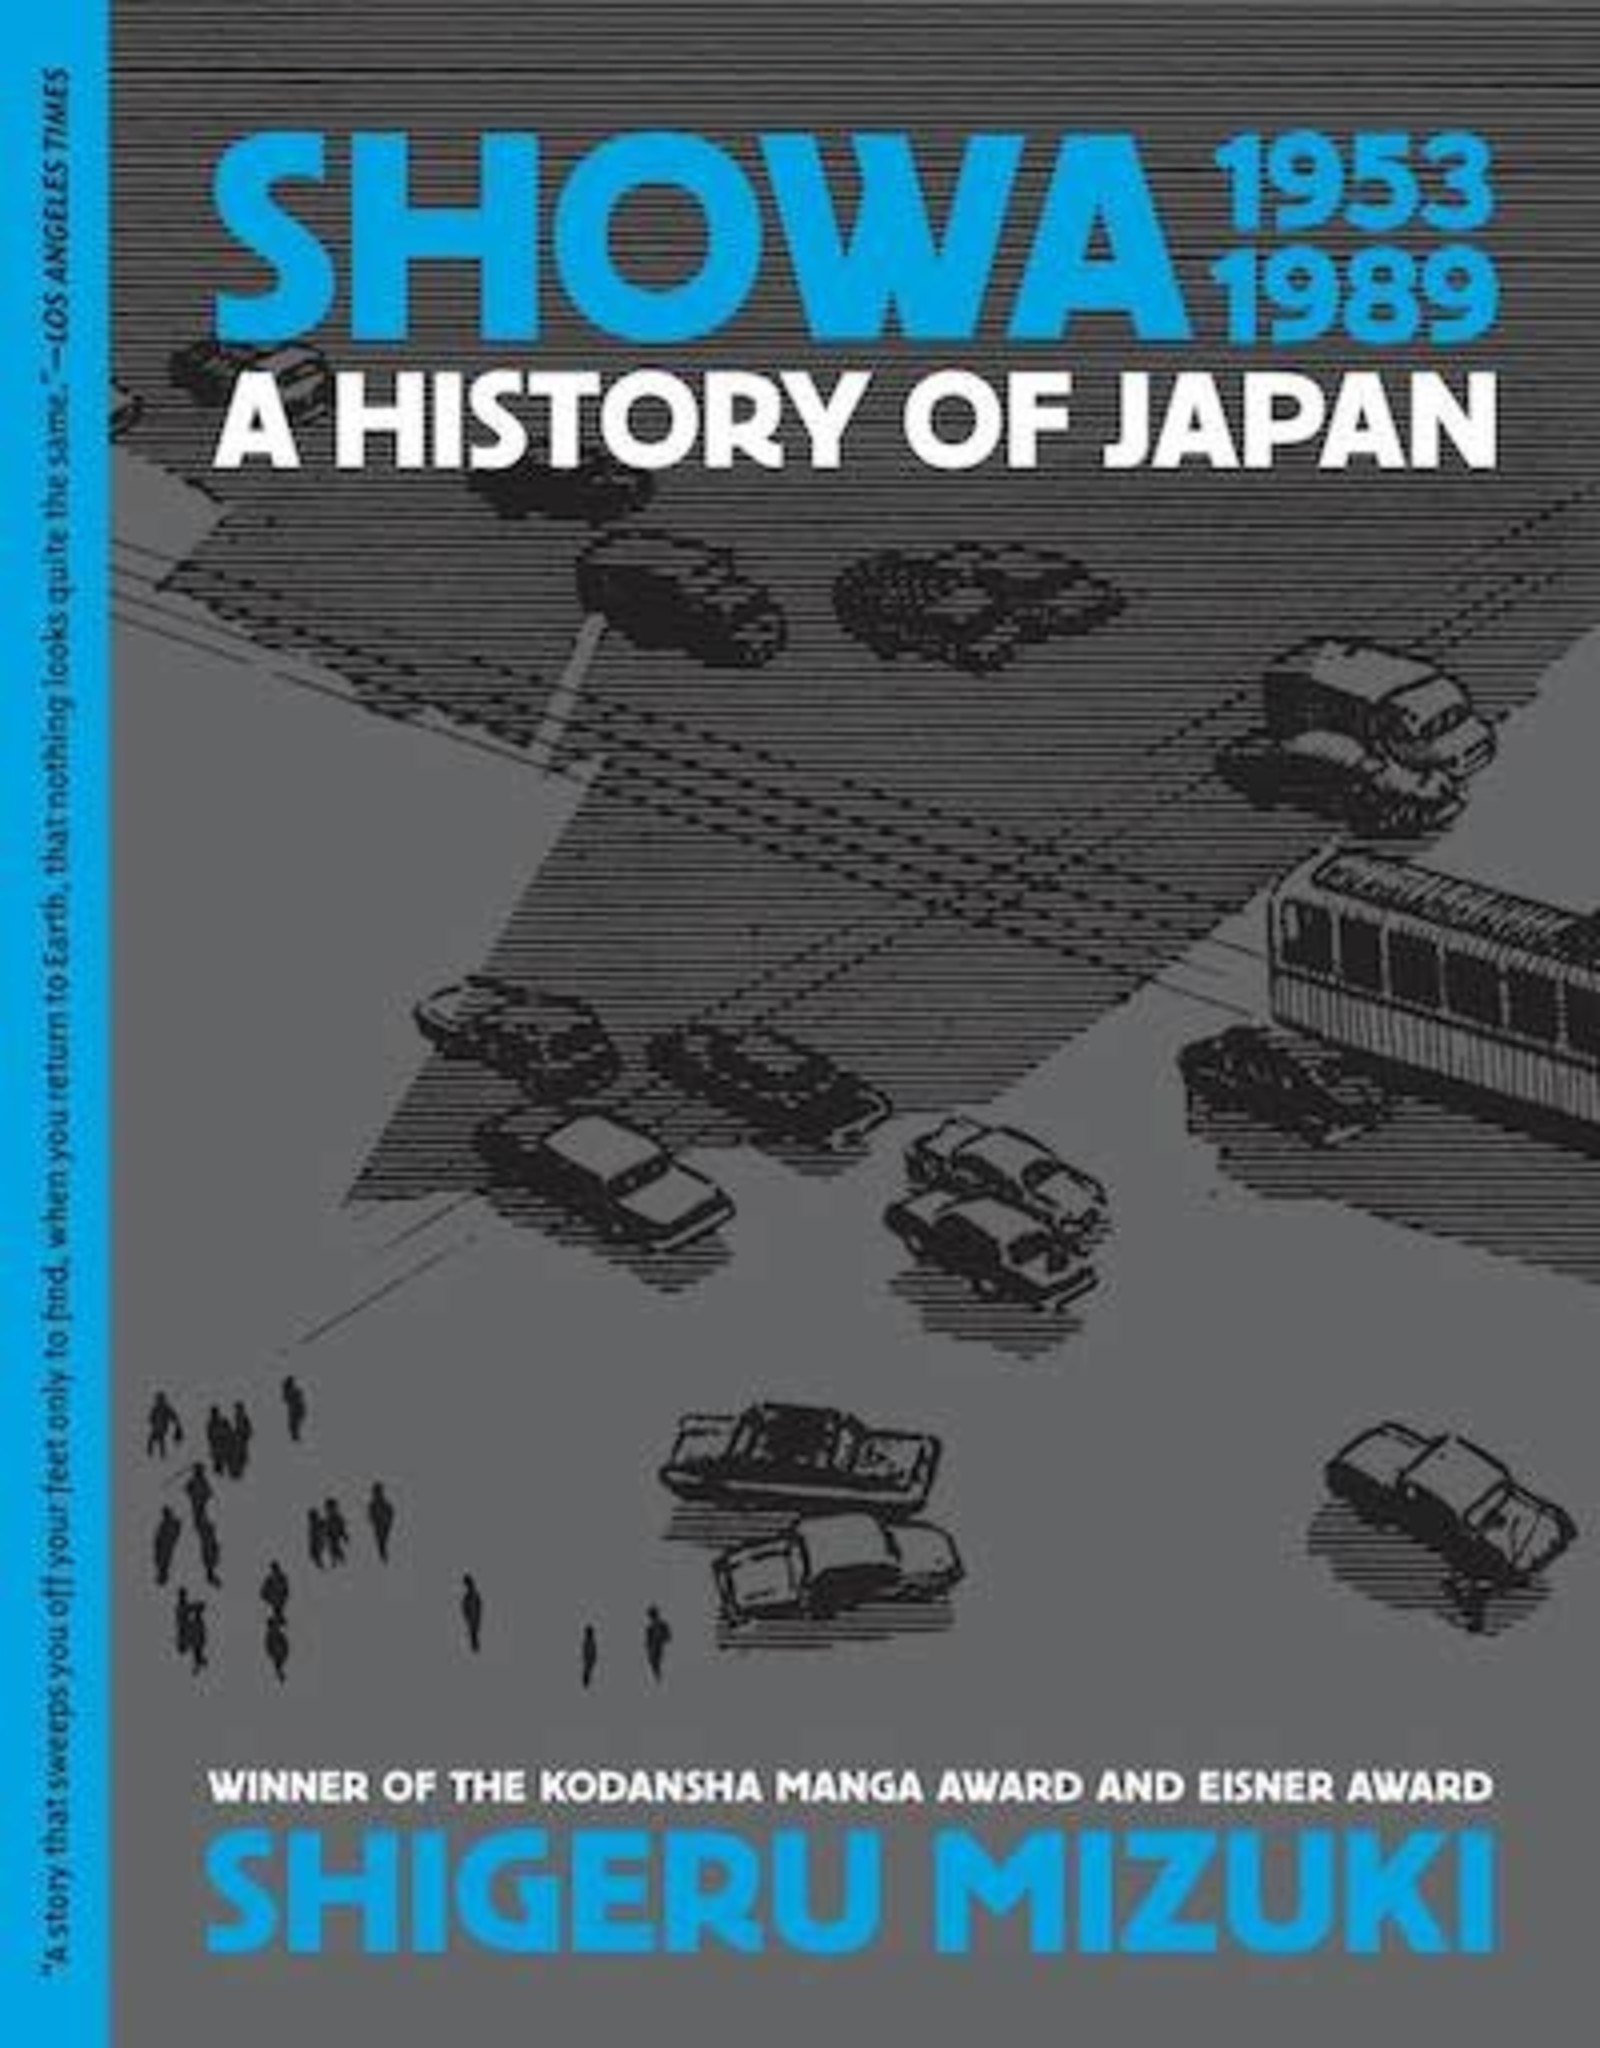 Drawn & Quarterly Showa History Of Japan GN Vol 04 1953-1989 Shigeru Mizuki